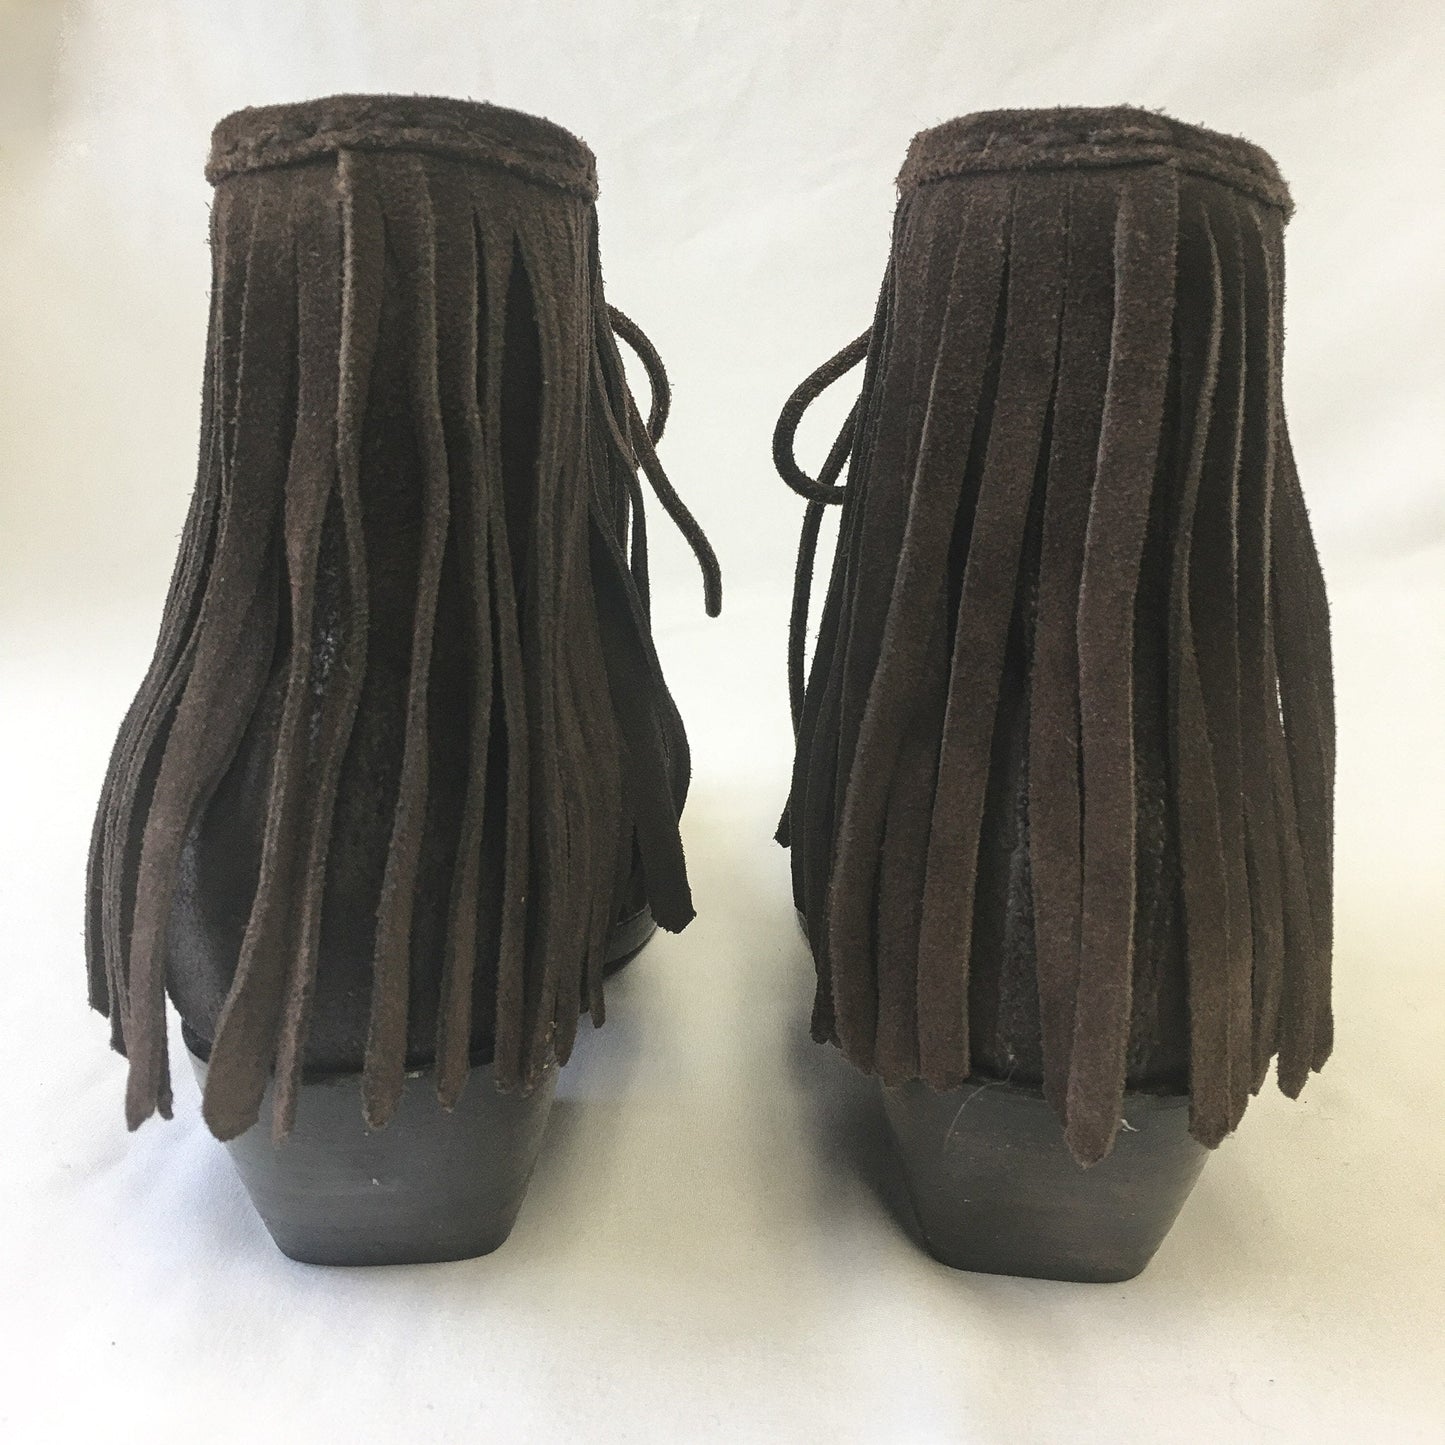 Vintage FRYE Sacha Fringe Distressed Brown Suede Ankle Boots, Sz. 6B, Vintage Western Boots